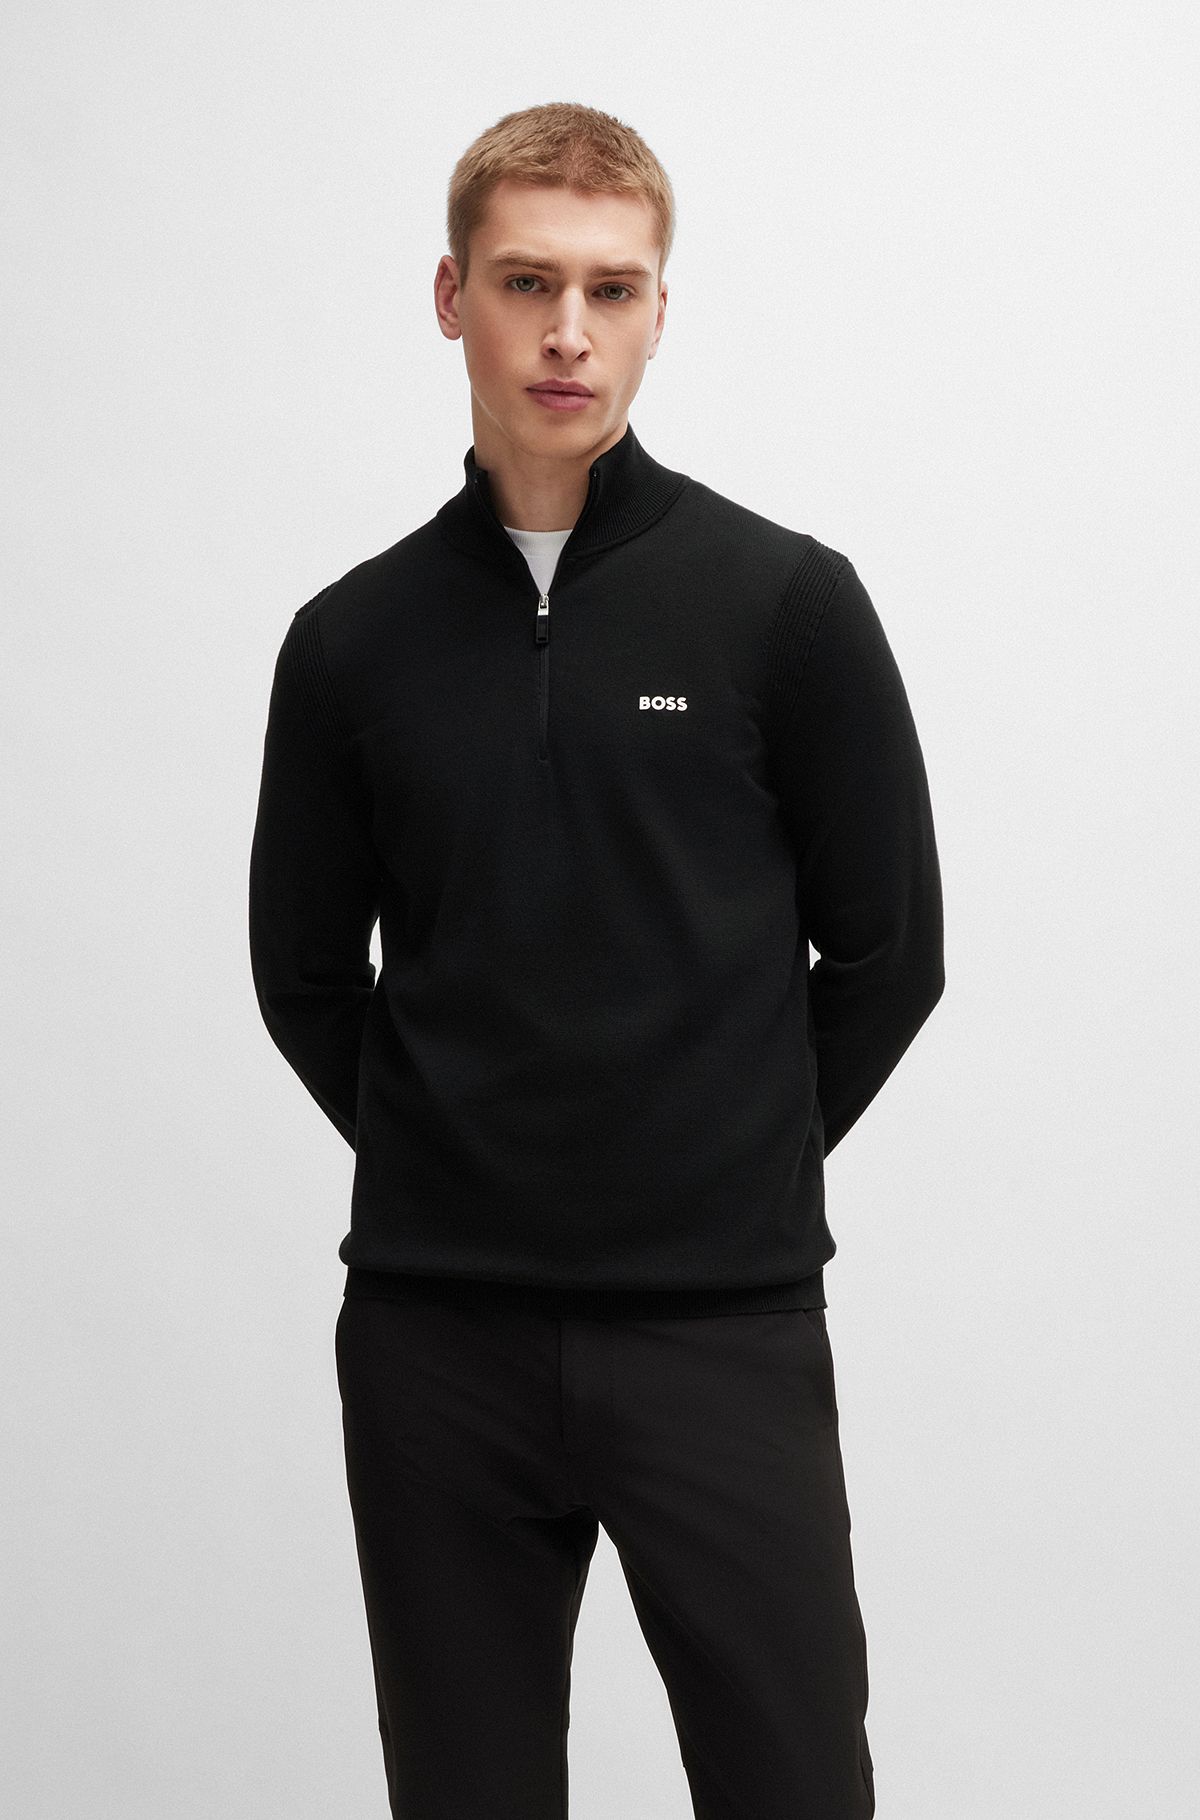 Cotton-blend zip-neck sweater with logo print, Black